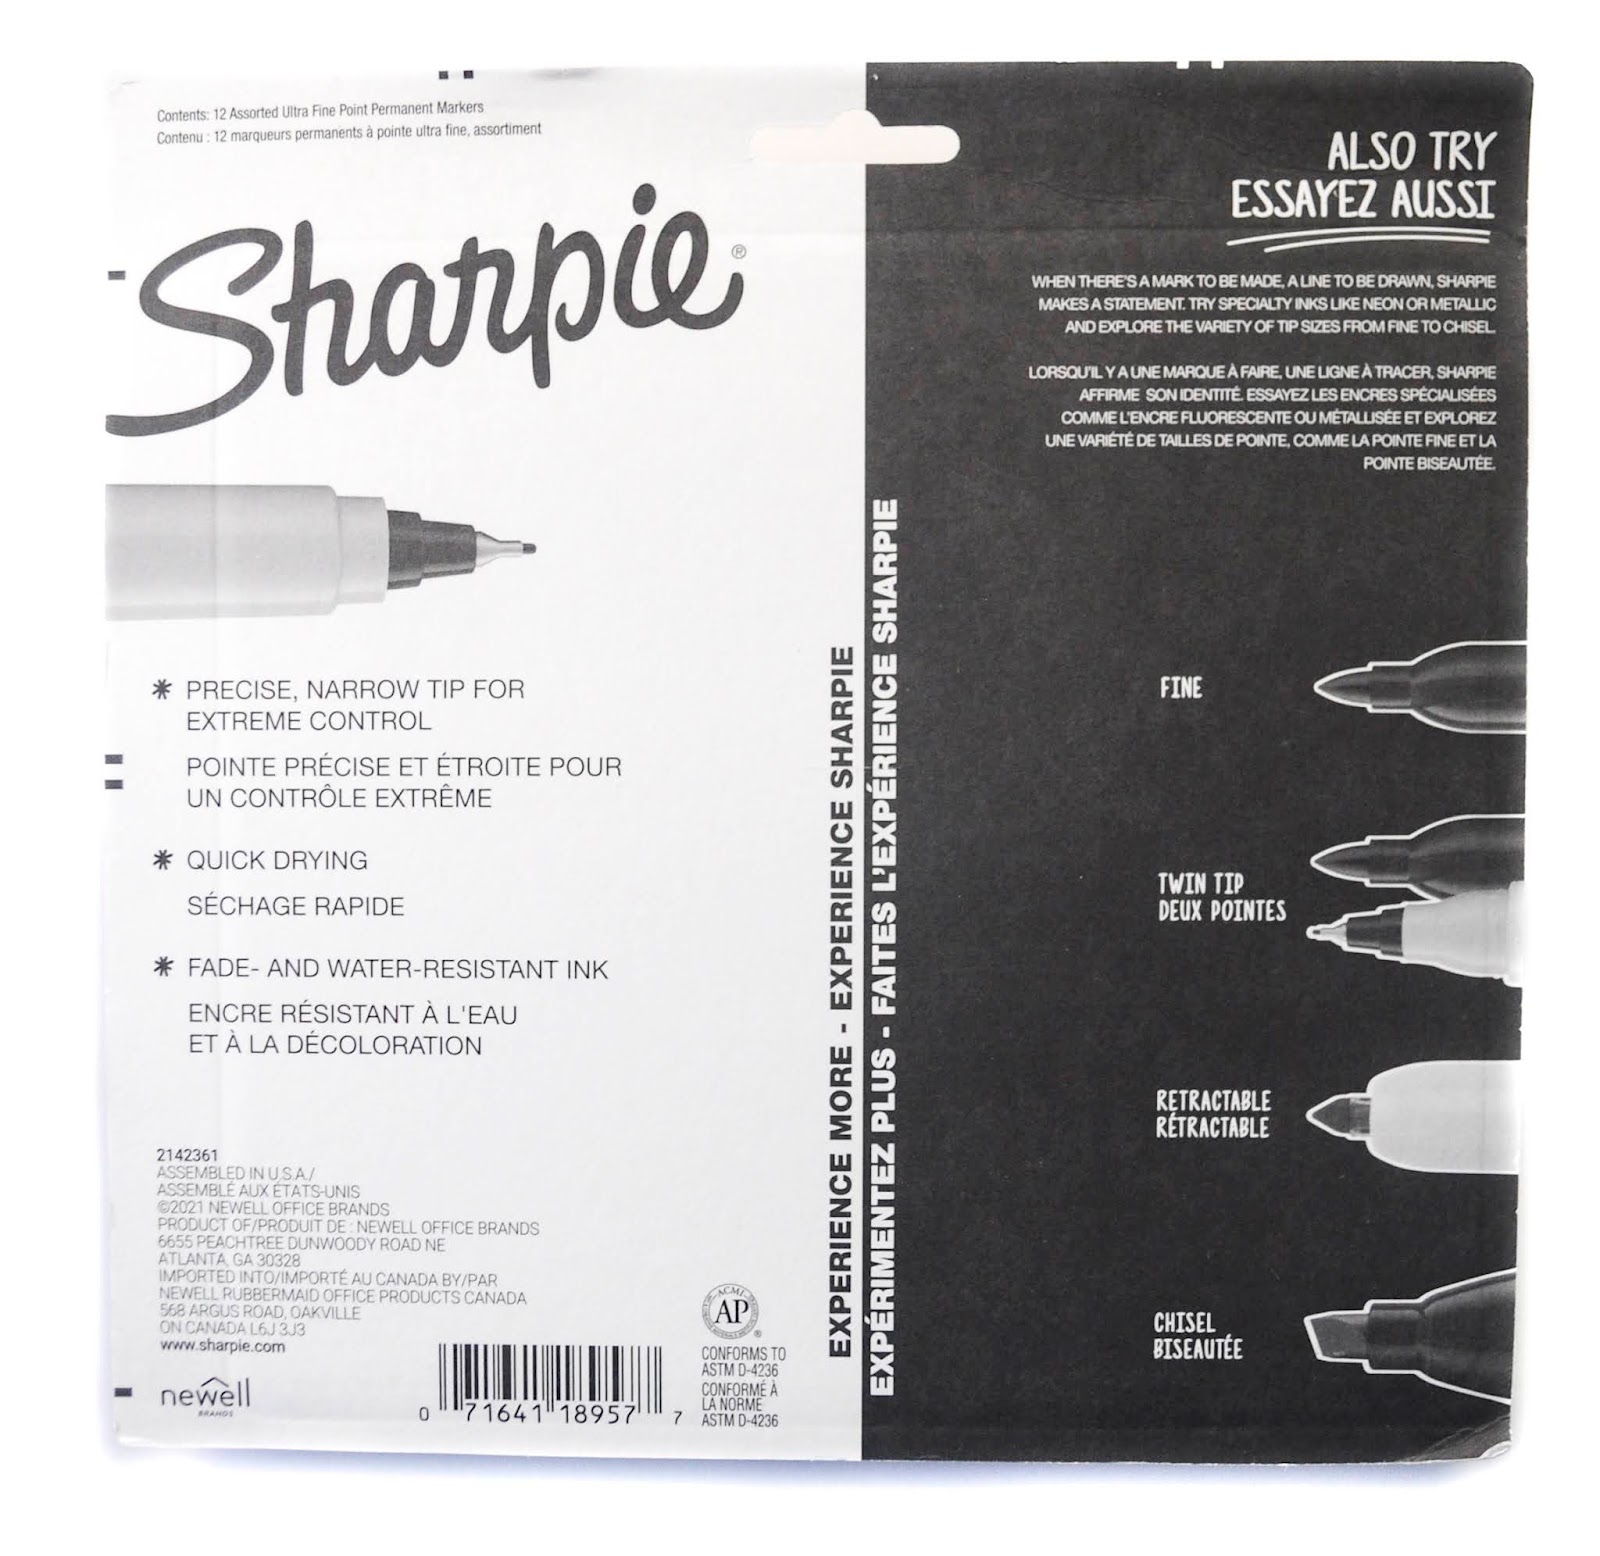 Sharpie® Mystic Gems Ultra-Fine Needle Tip Marker, 24 ct - Pay